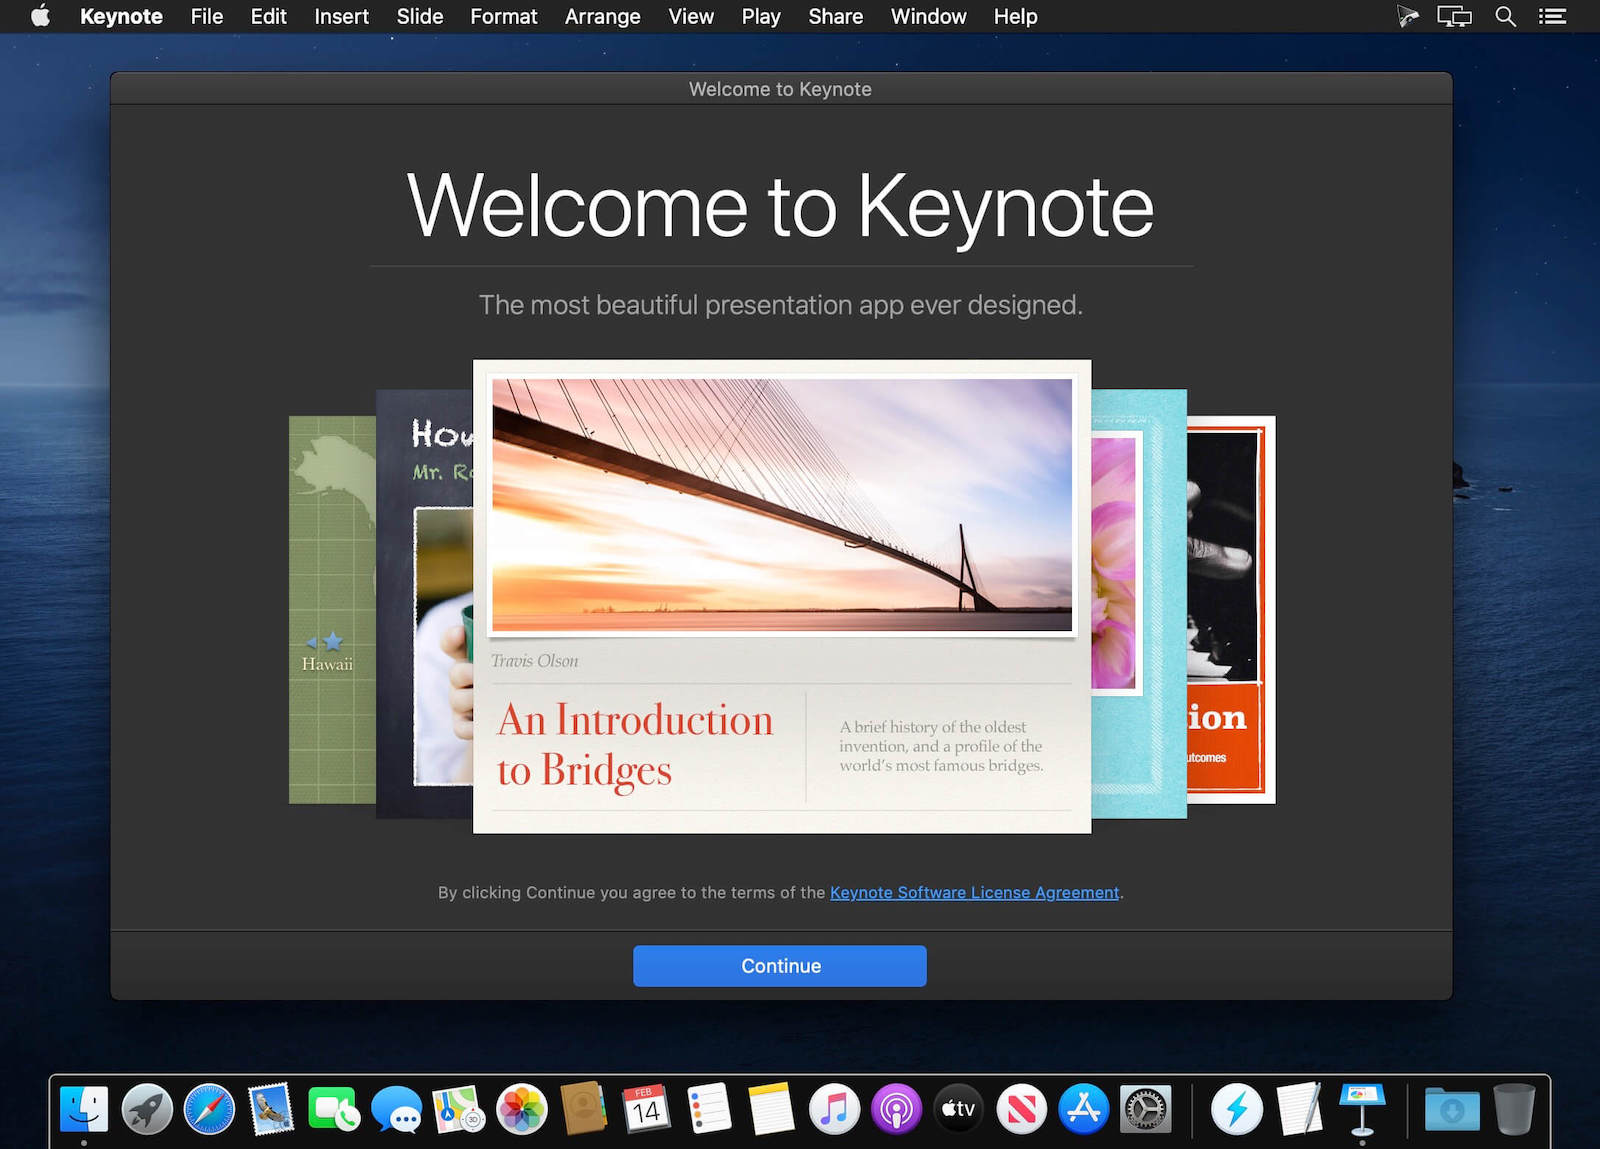 apple keynote download